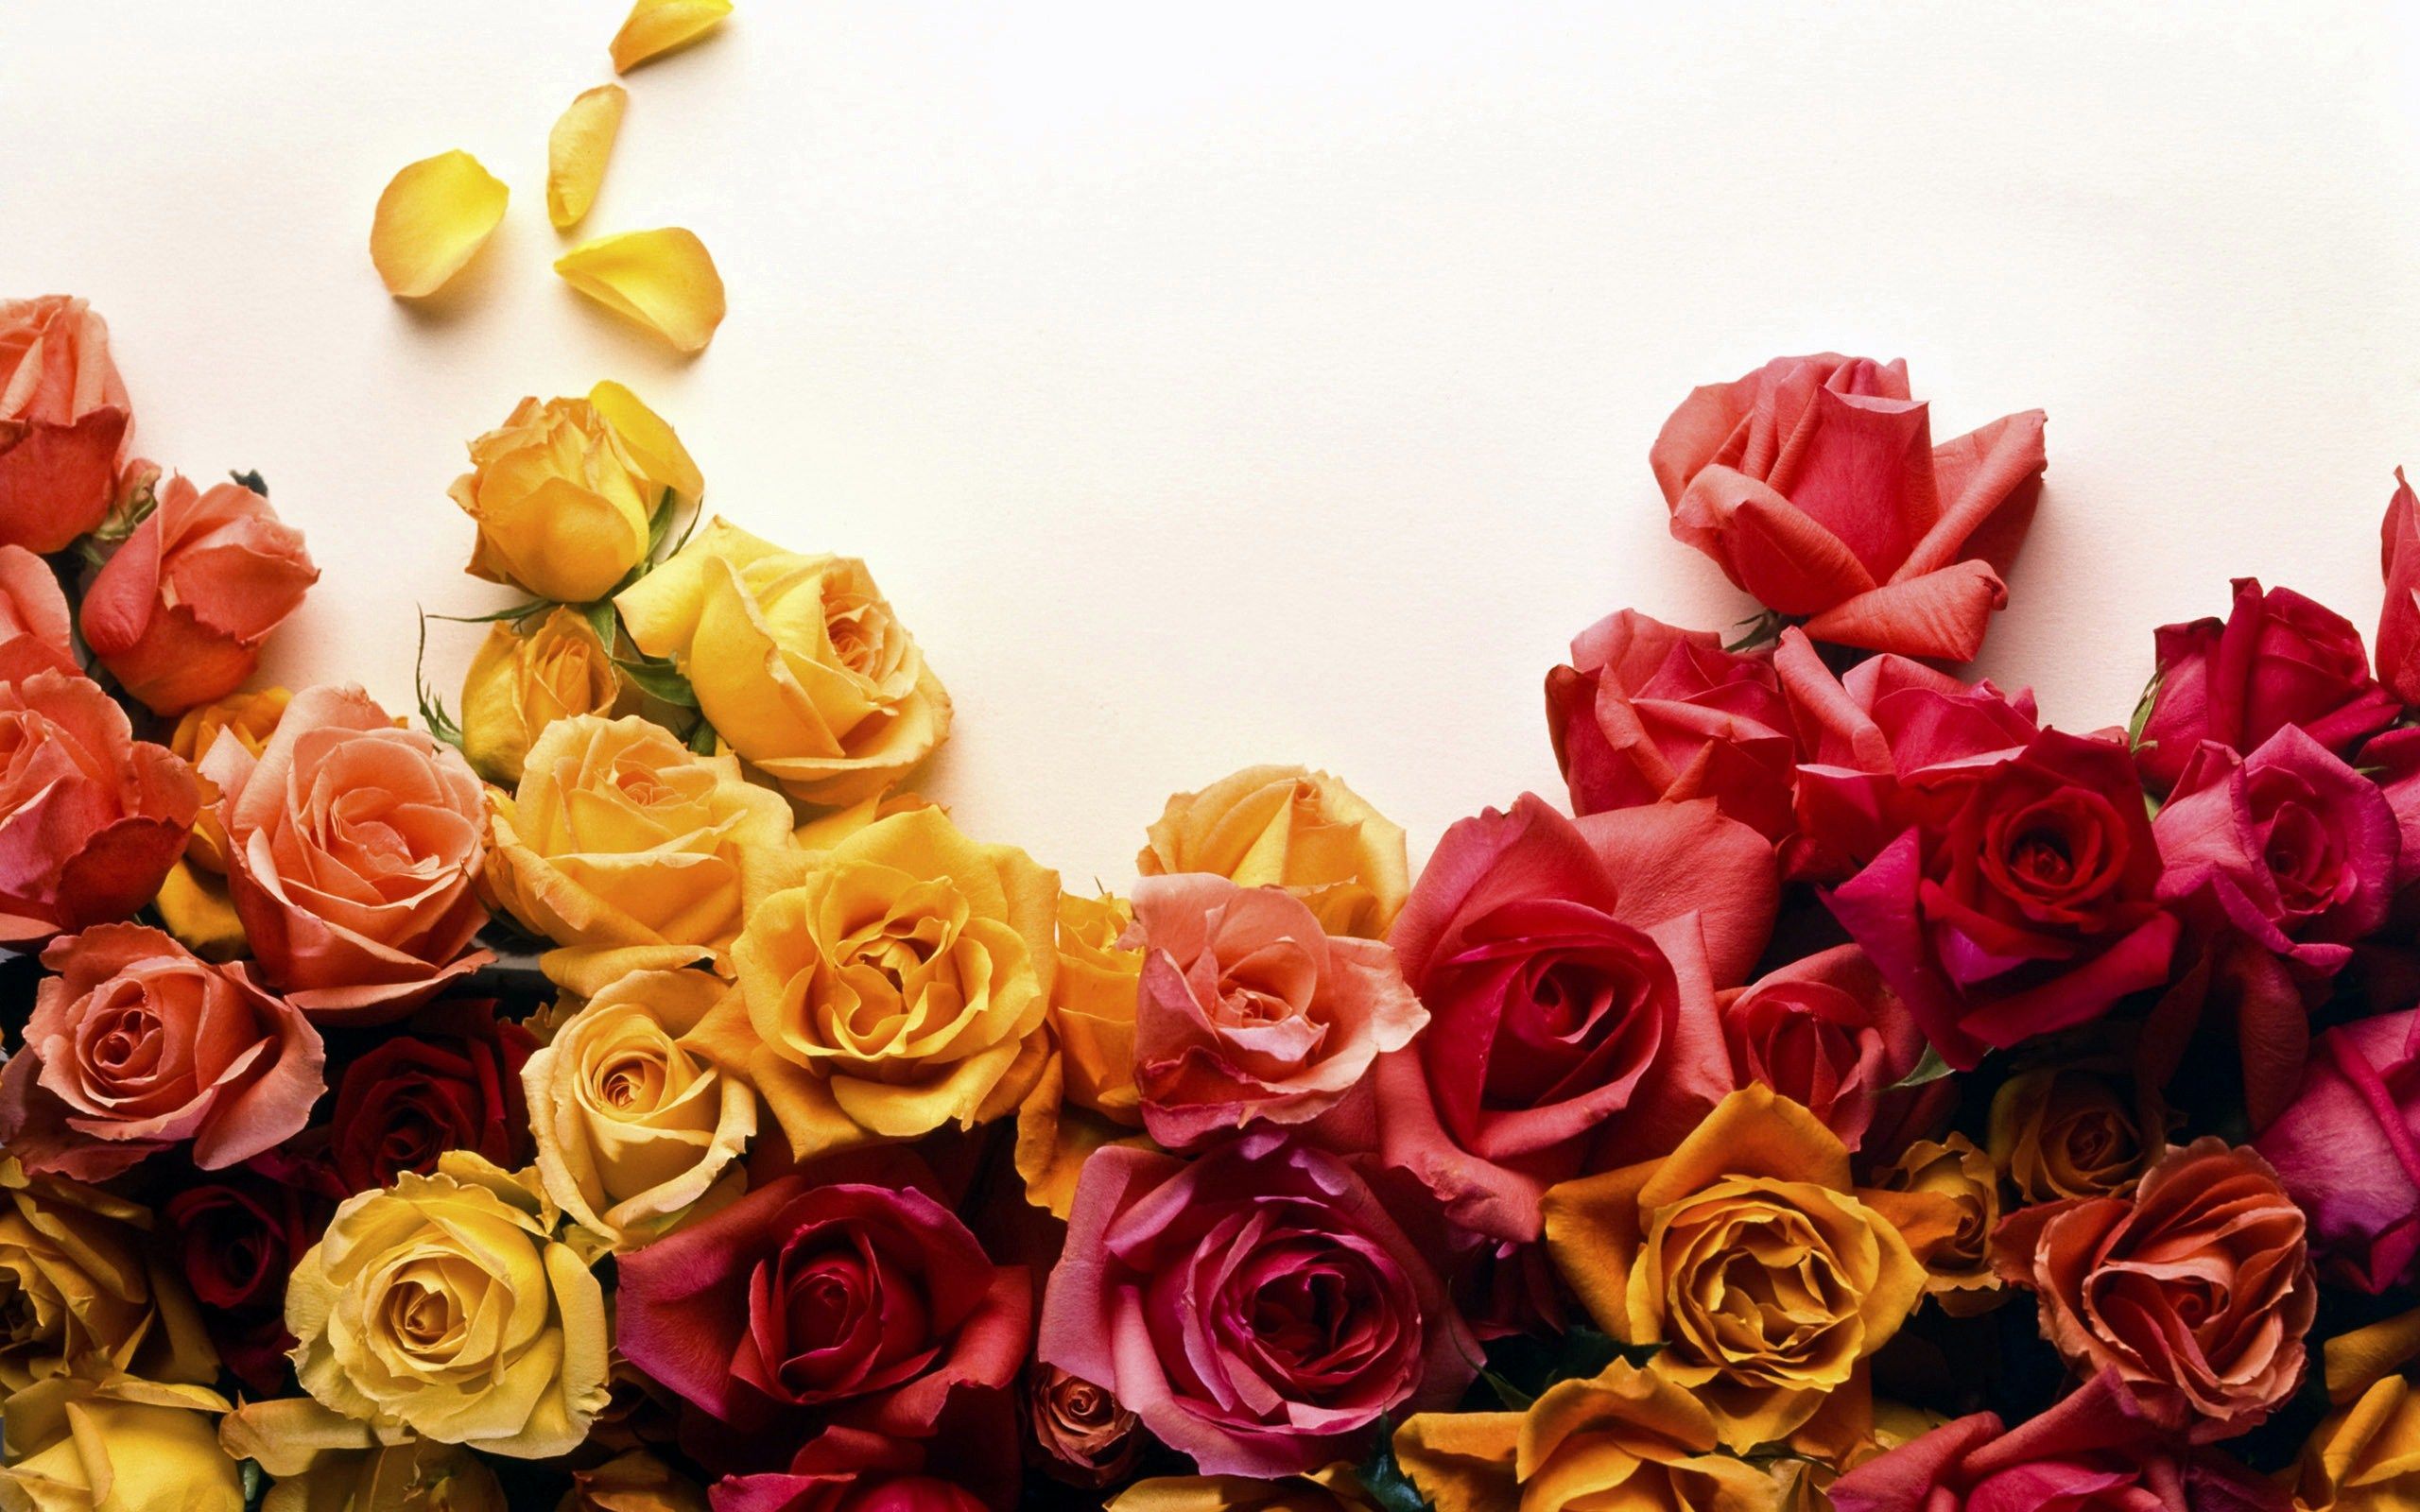 Colors of Roses. Rose wallpaper, Flower wallpaper, Flowers